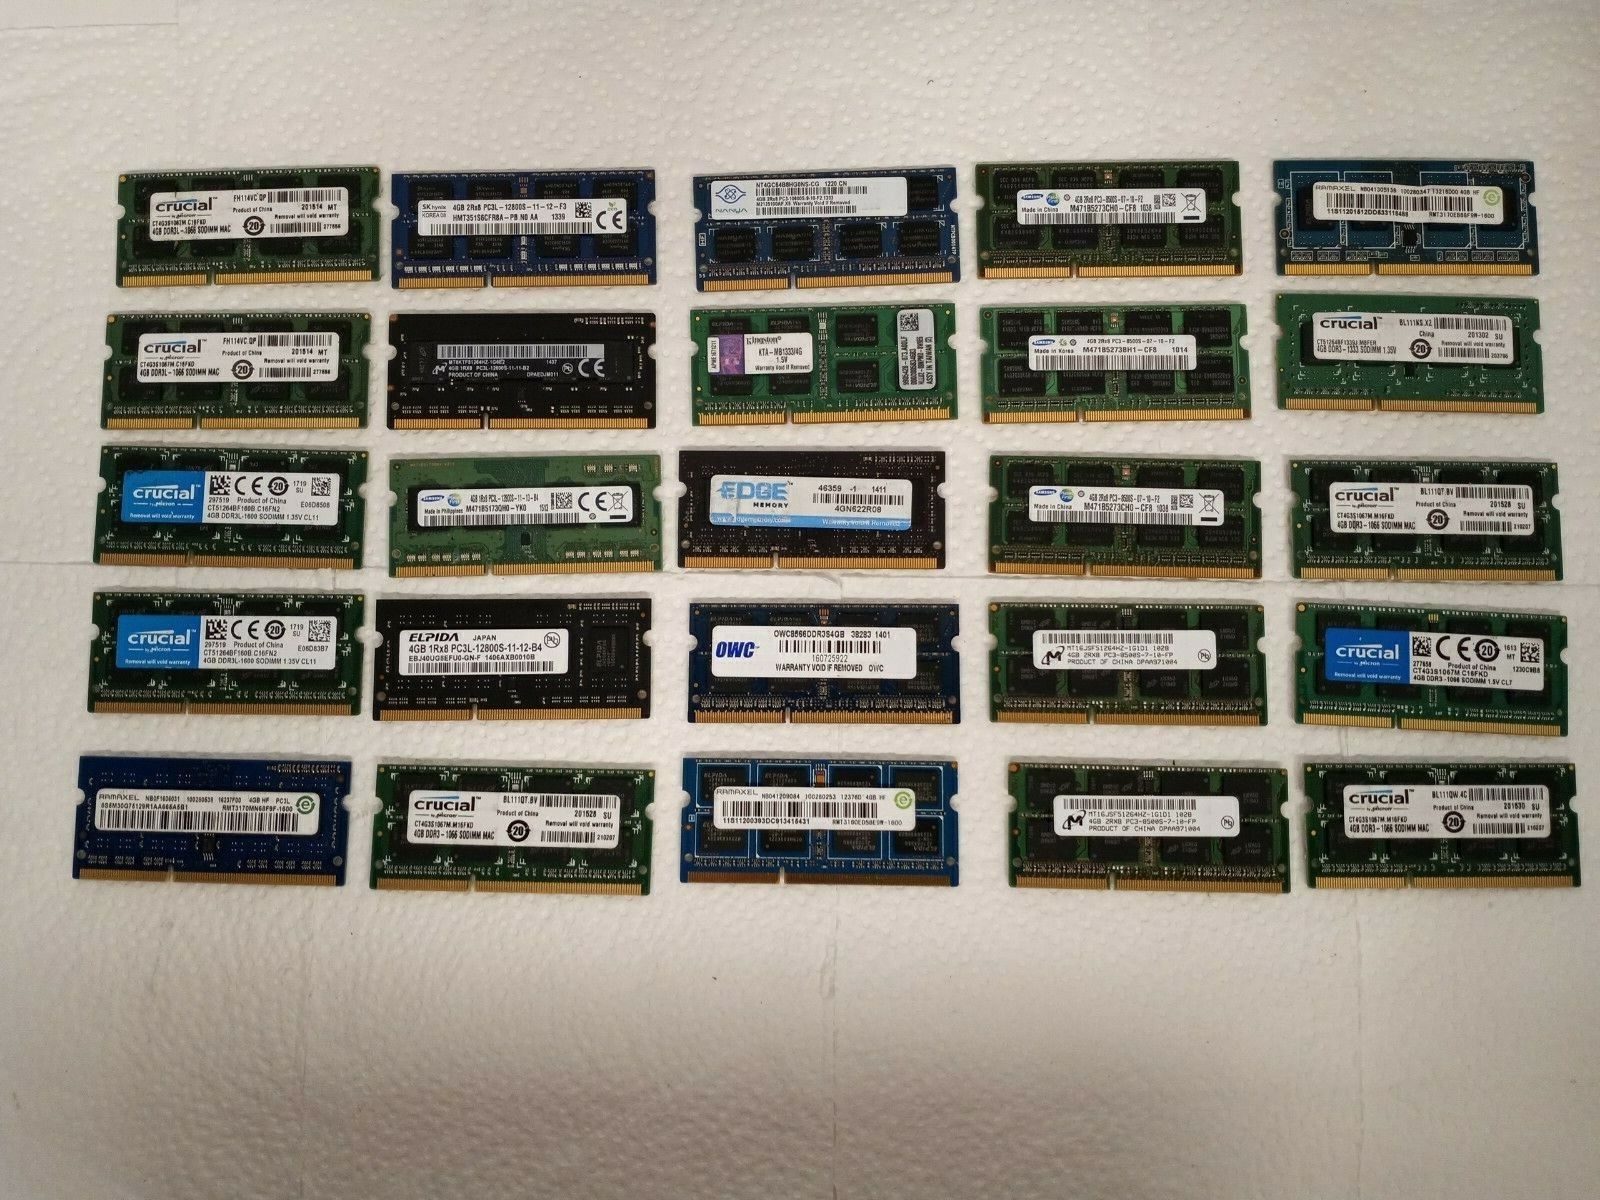 Lot of 25x MIX Brand 4GB PC3 & PC3L SODIMM Laptop Memory Ram Total:200GB(25x4GB)